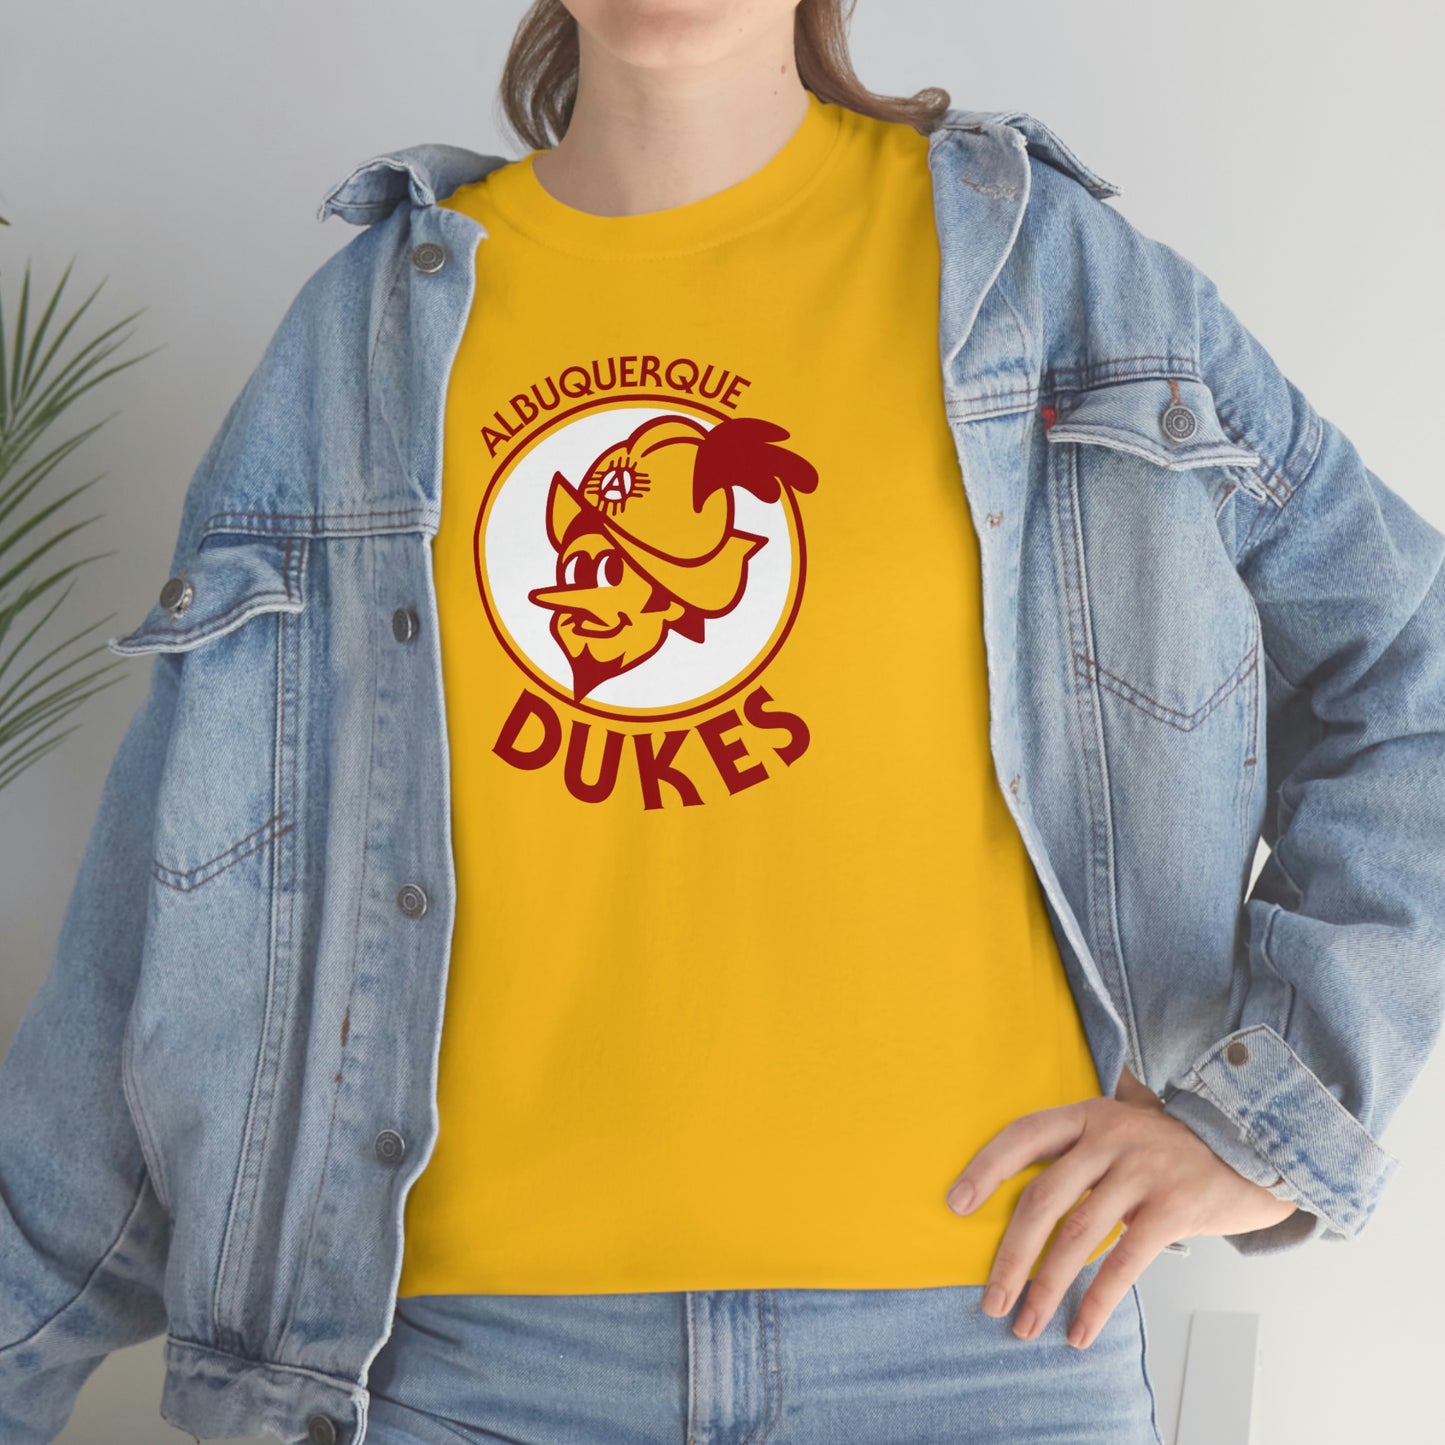 Albuquerque Dukes T-Shirt